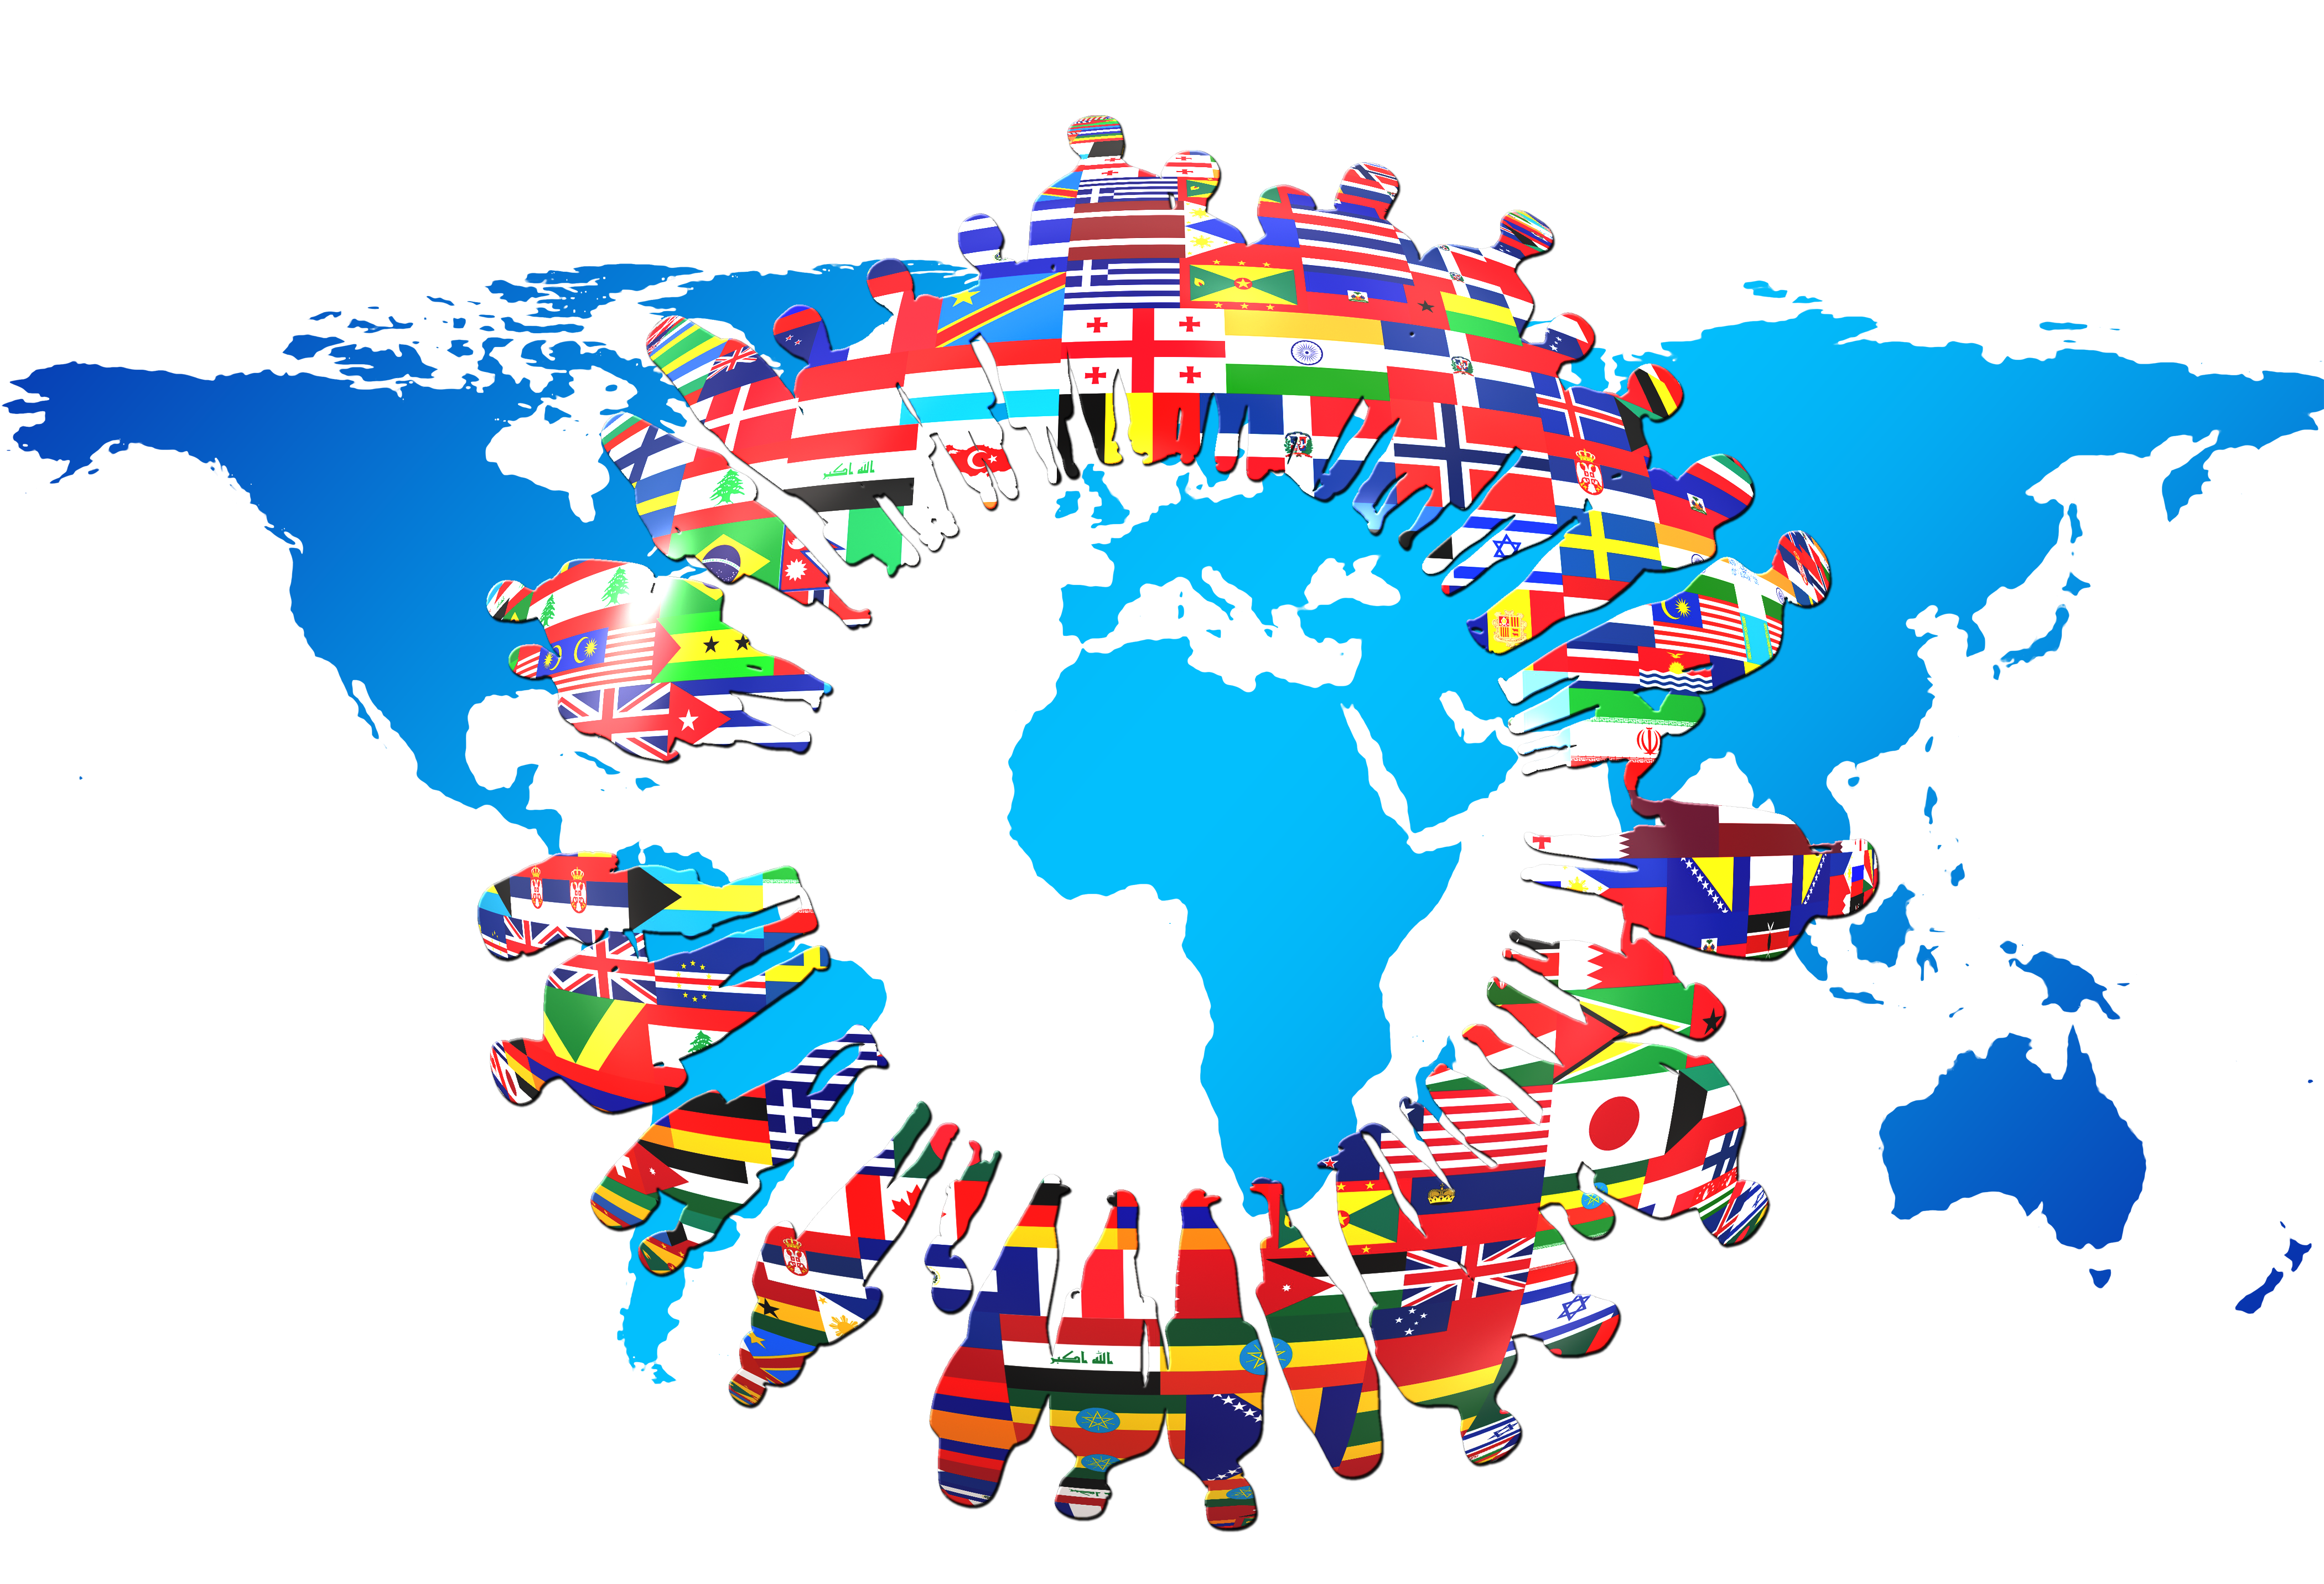 Экономические связи нации. Символы глобализации. Международное сотрудничество. Глобализация картинки. Глобус с флагами стран.